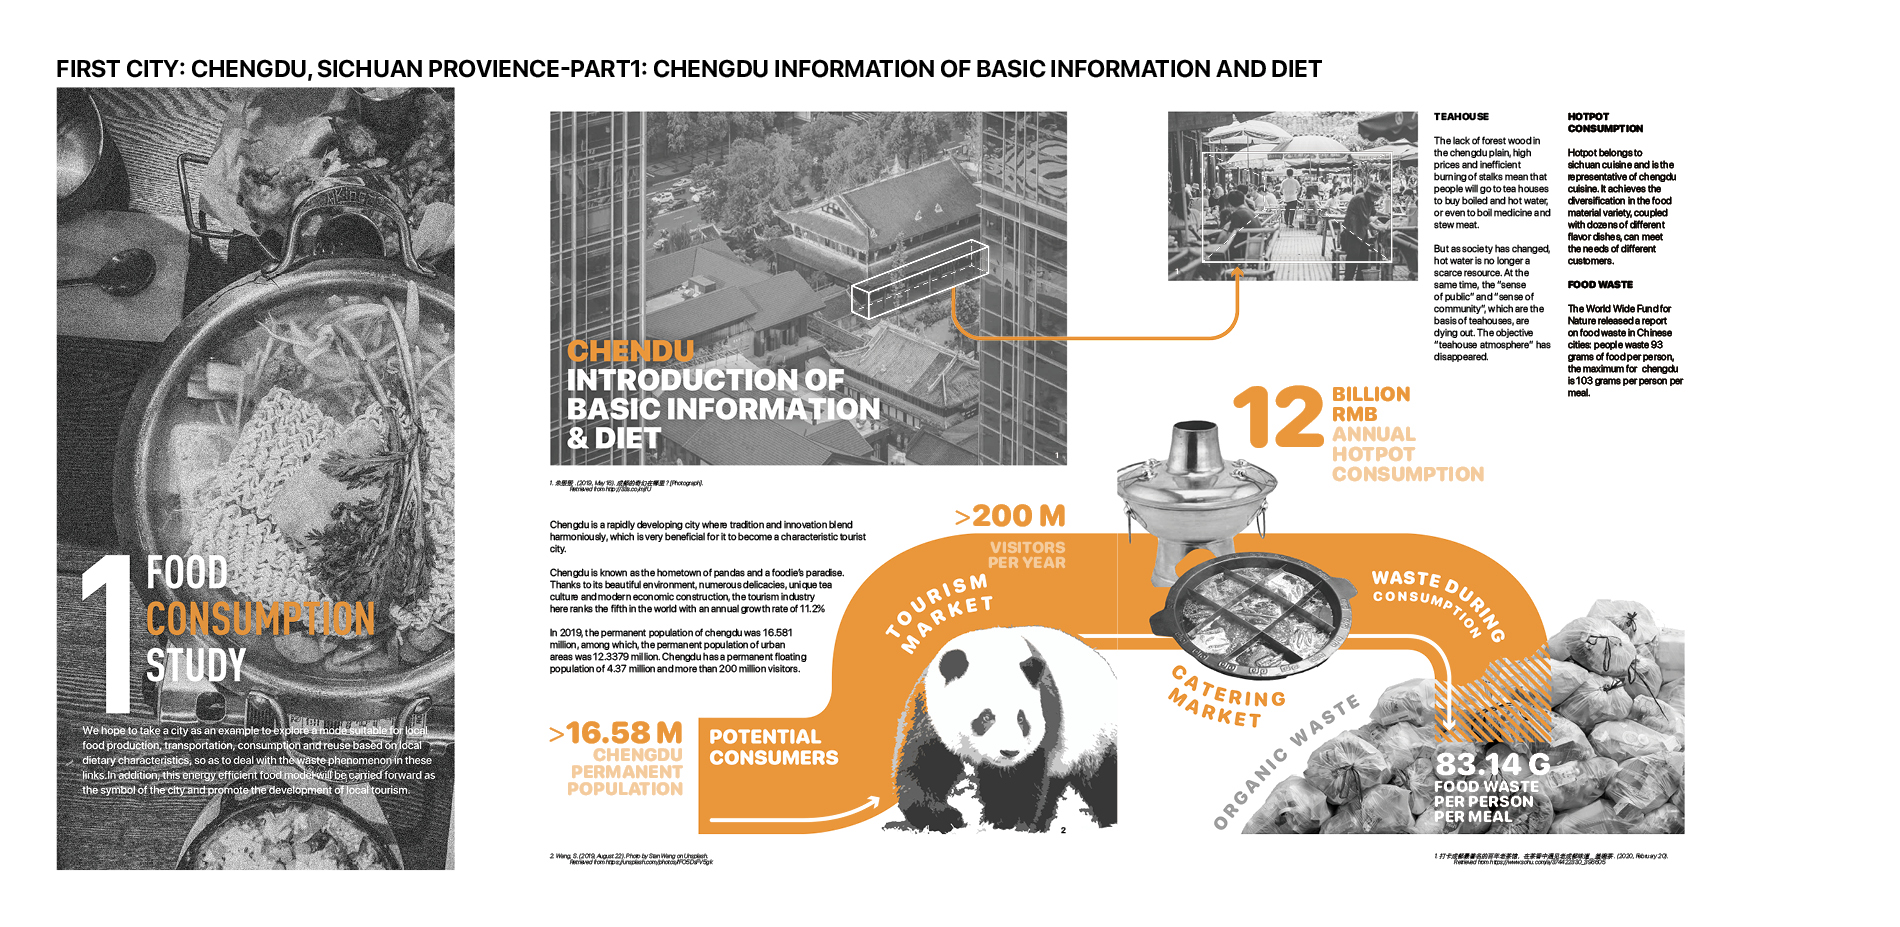 Chengdu Information of Basic Information and Diet (First Part, Chengdu)